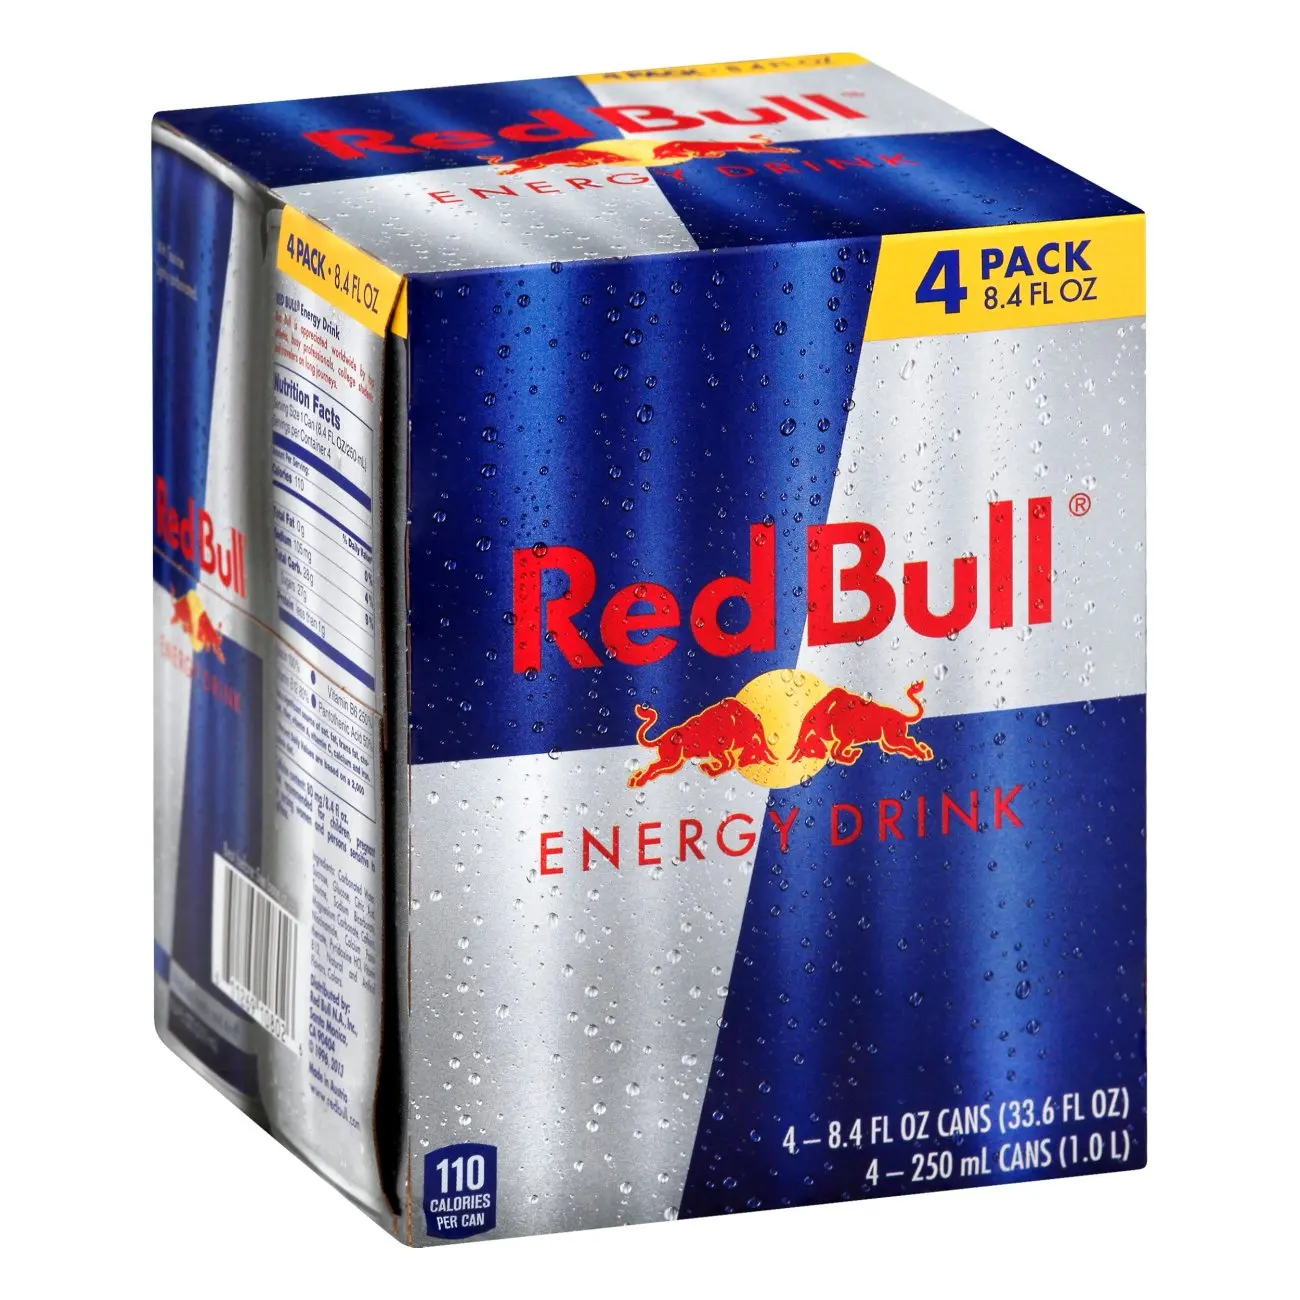 ORIGINAL Red Bull 250 ml Energy Drink from Austria / Red Bull 250 ml Energy Drink / Wholesale Redbull